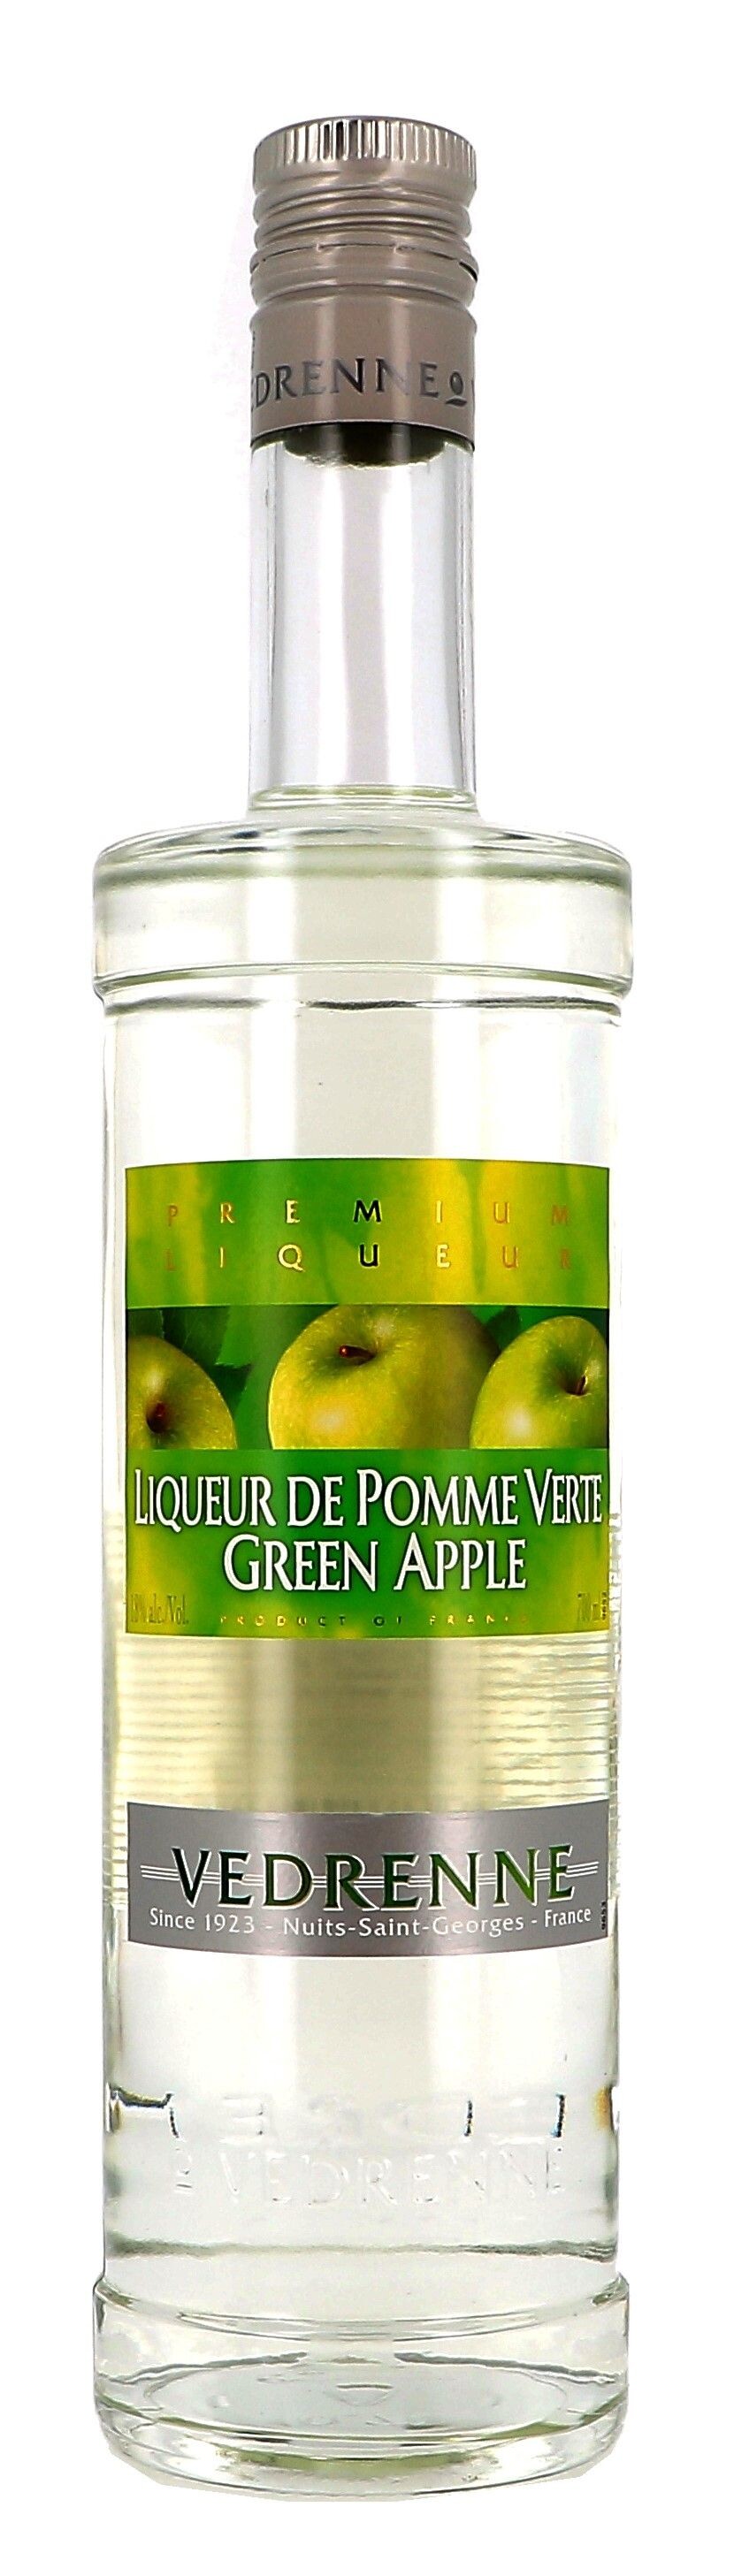 Vedrenne Creme de Pomme Verte 70cl 18% Groene Appellikeur (Likeuren)